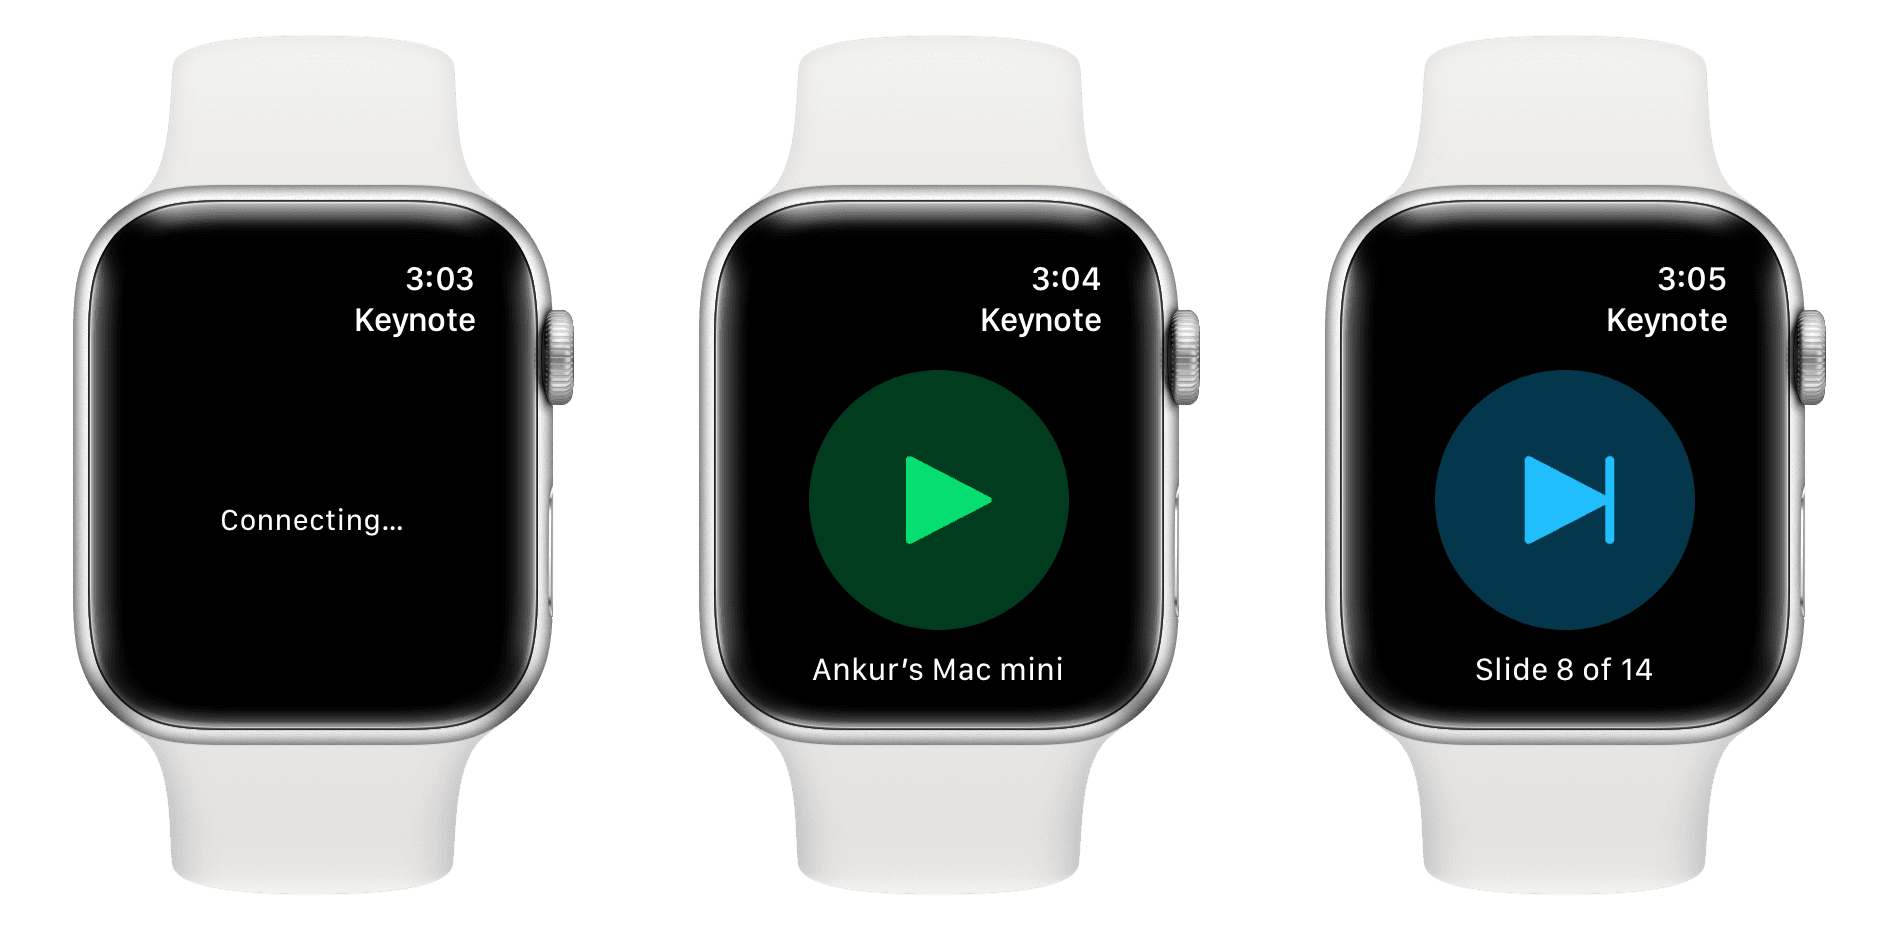 Using Apple Watch to wirelessly control Keynote presentation on Mac